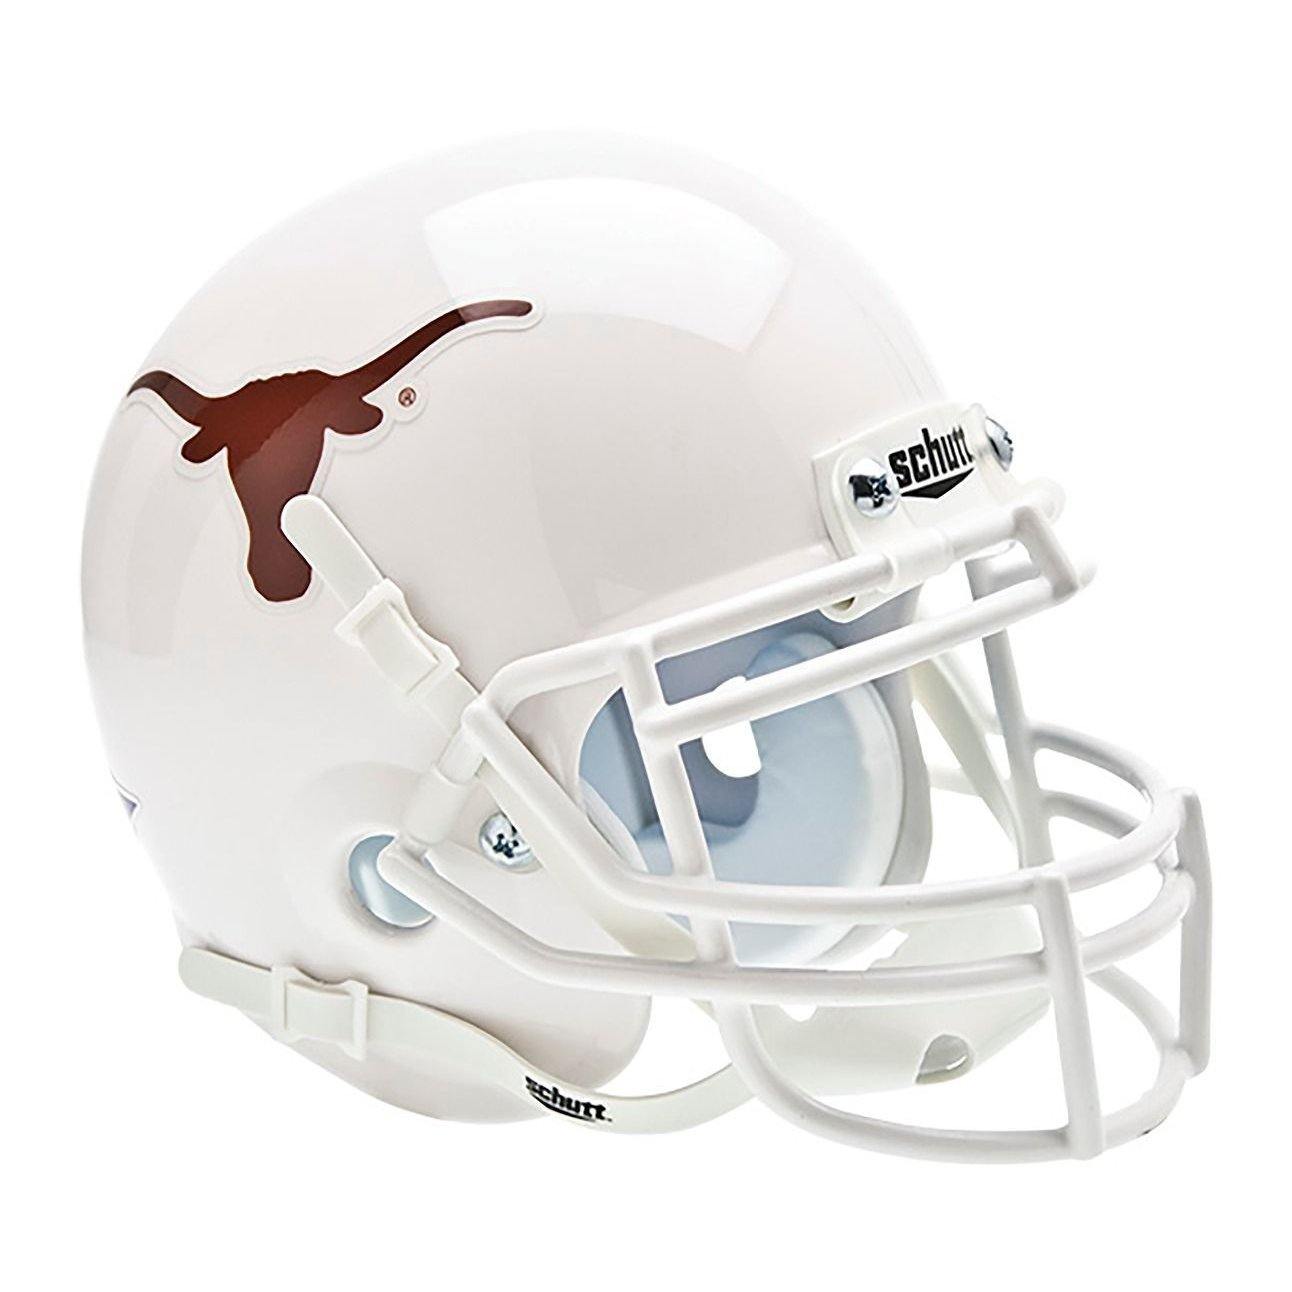 Texas Longhorns College Football Collectible Schutt Mini Helmet - Picture Inside - FANZ Collectibles - Fanz Collectibles